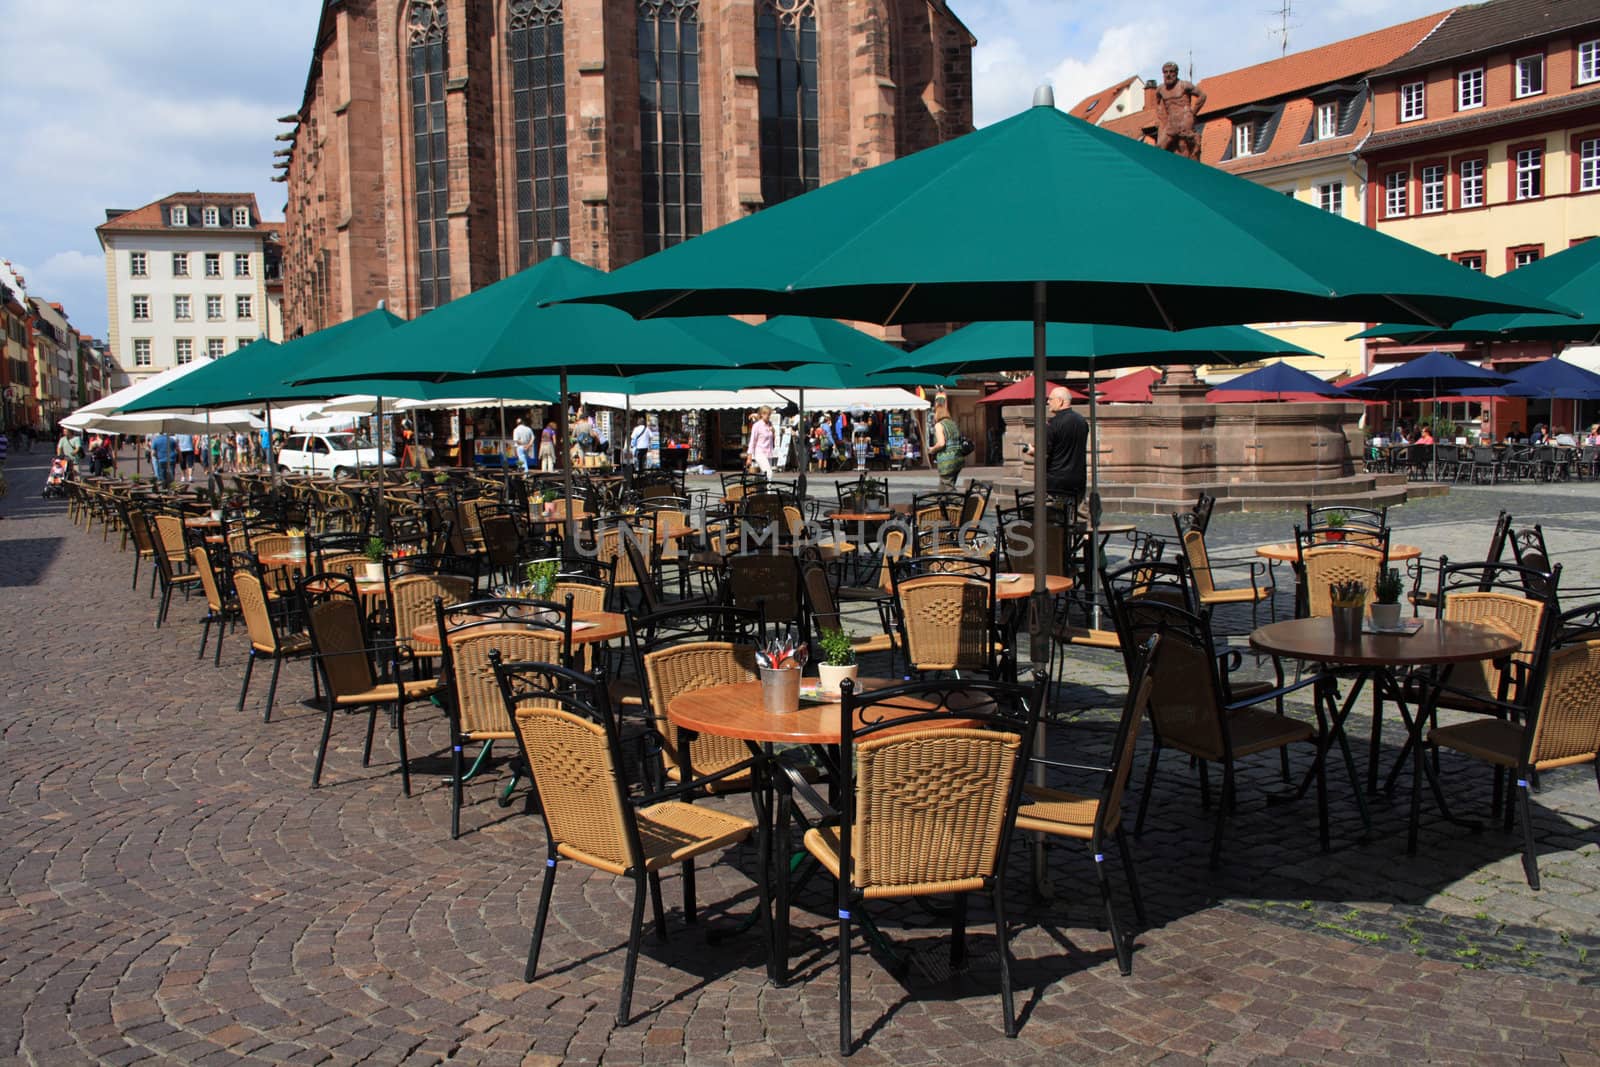 Heidelberg square by toneteam